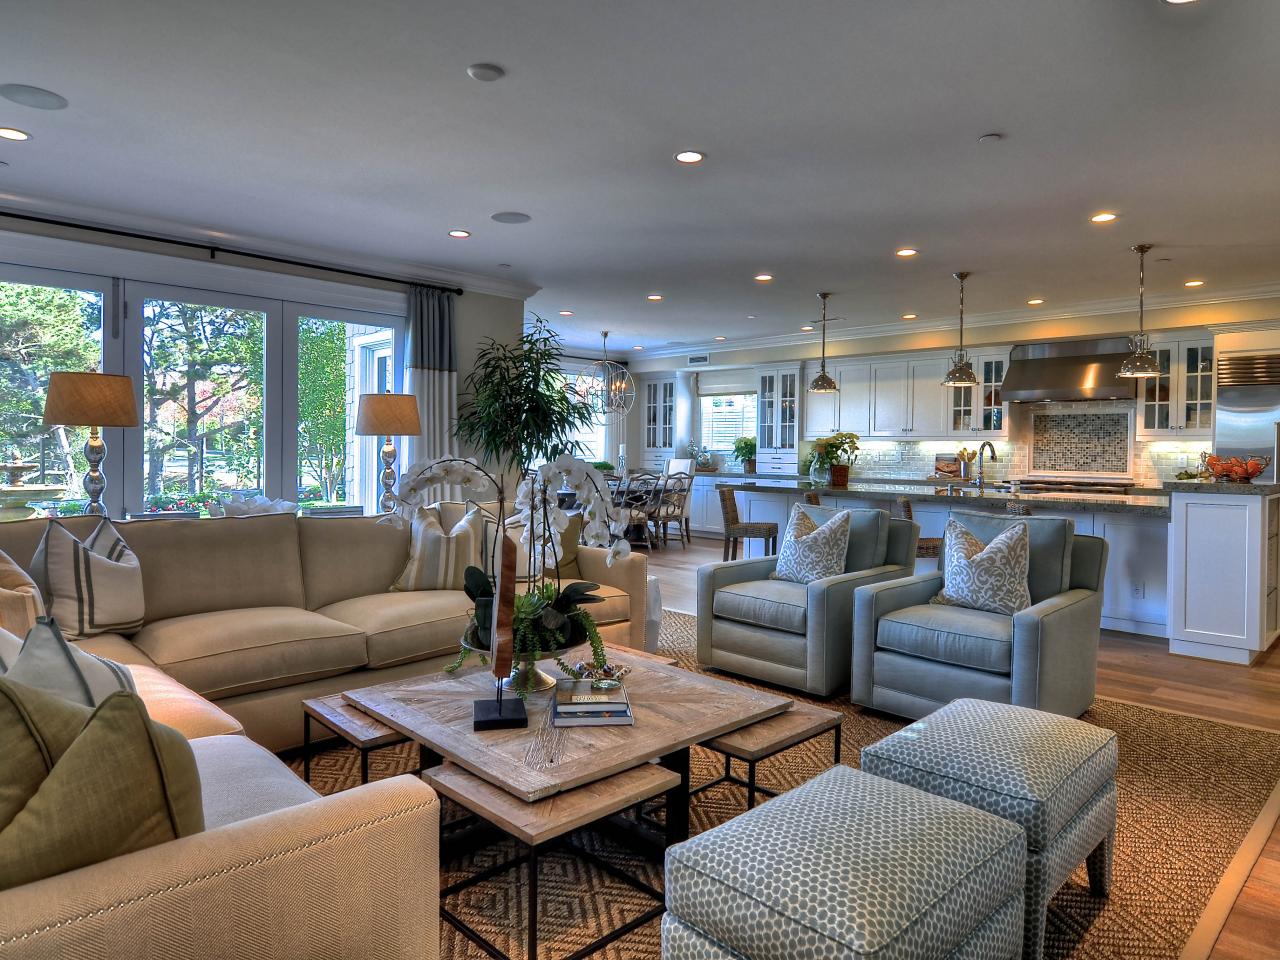 Open Concept Living Room With Coastal Theme | HGTV